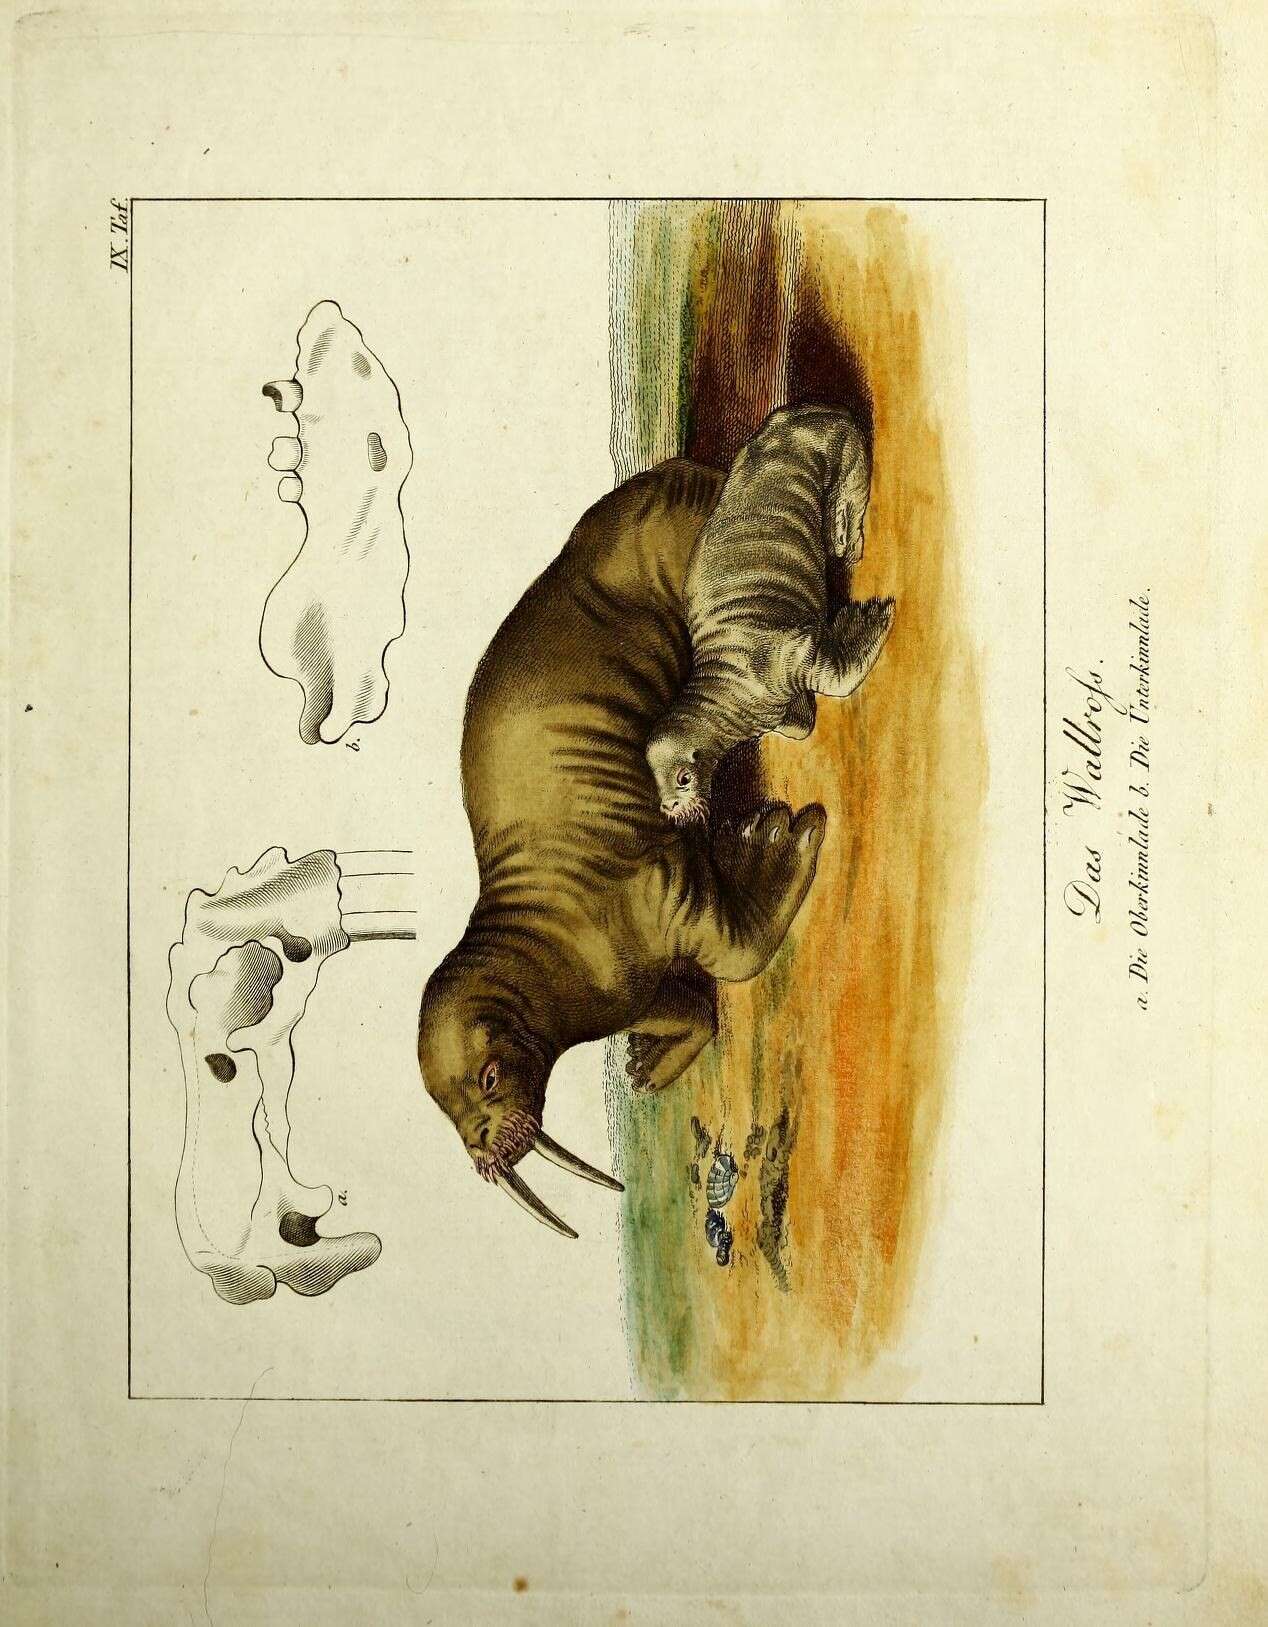 Image of walrus